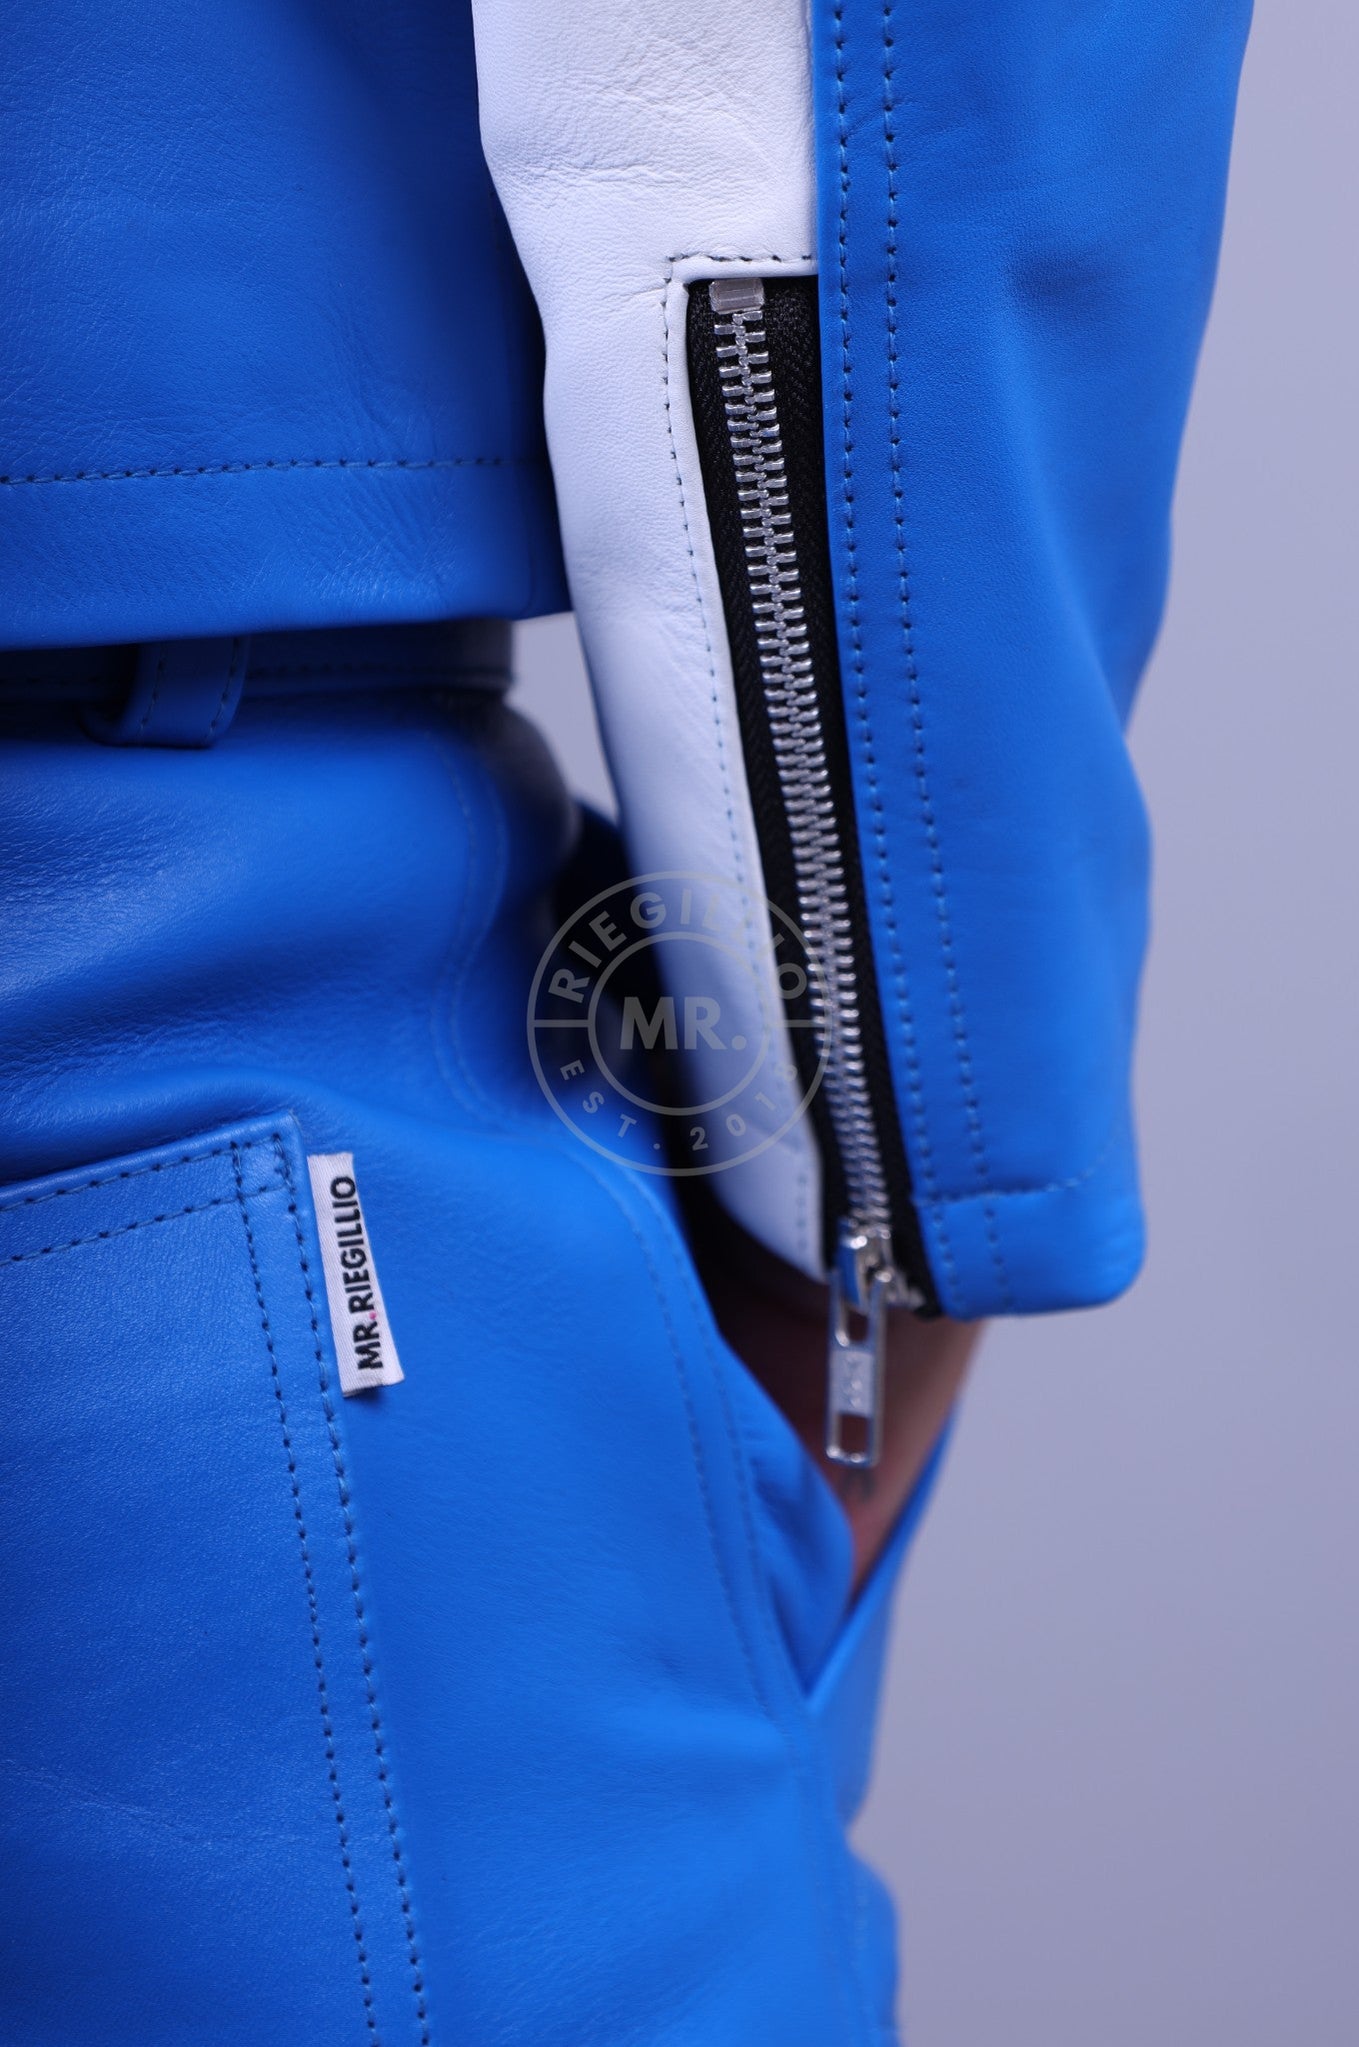 Leather Biker Logo Jacket - Blue / White *DISCONTINUED ITEM* at MR. Riegillio